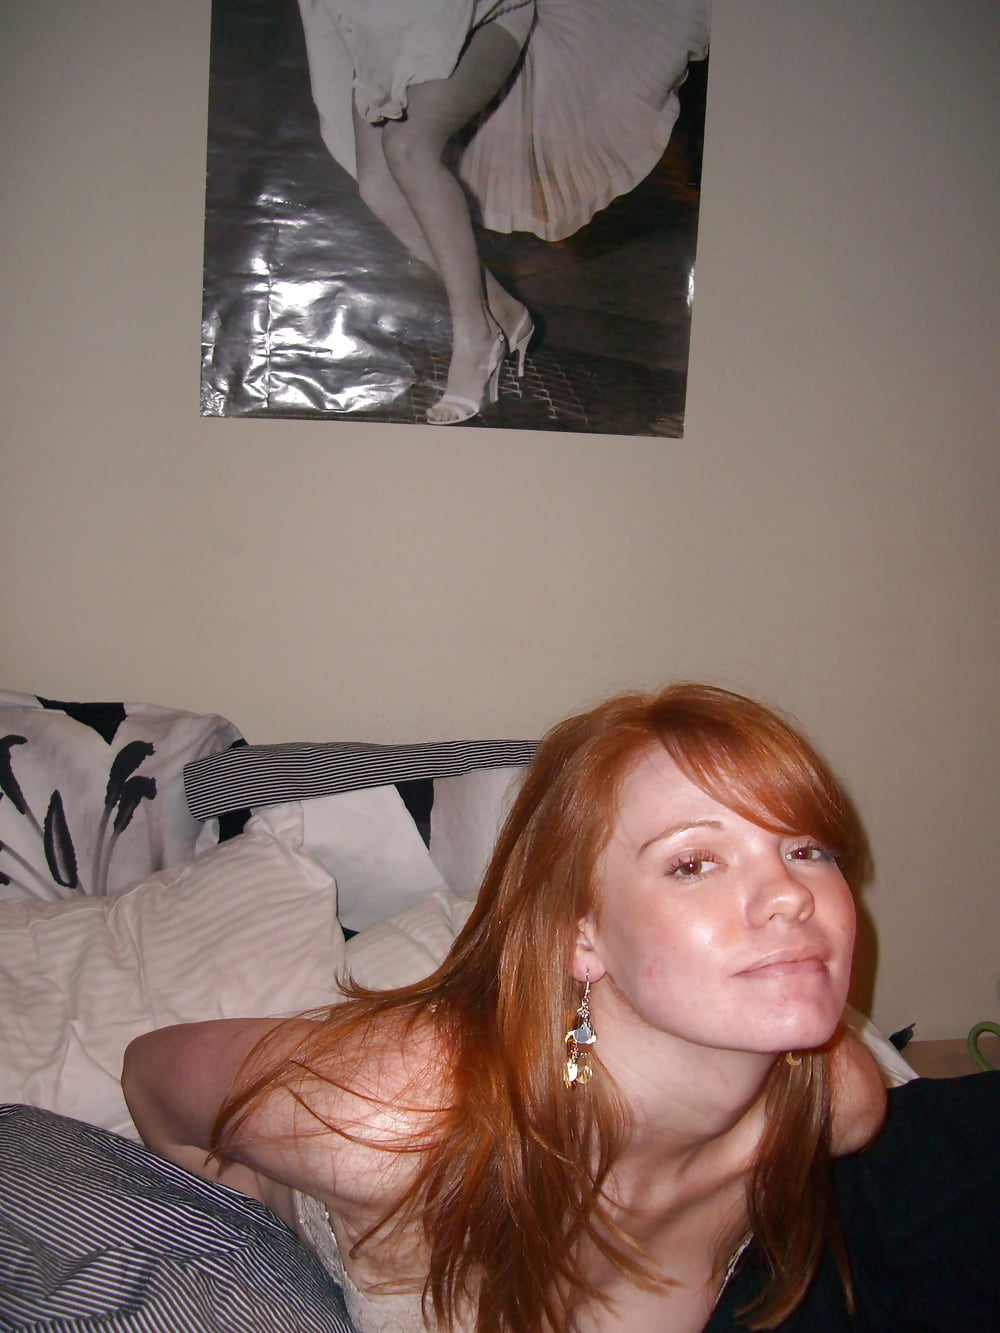 Sex Gallery redhead girlfriend naked 104359413 photo